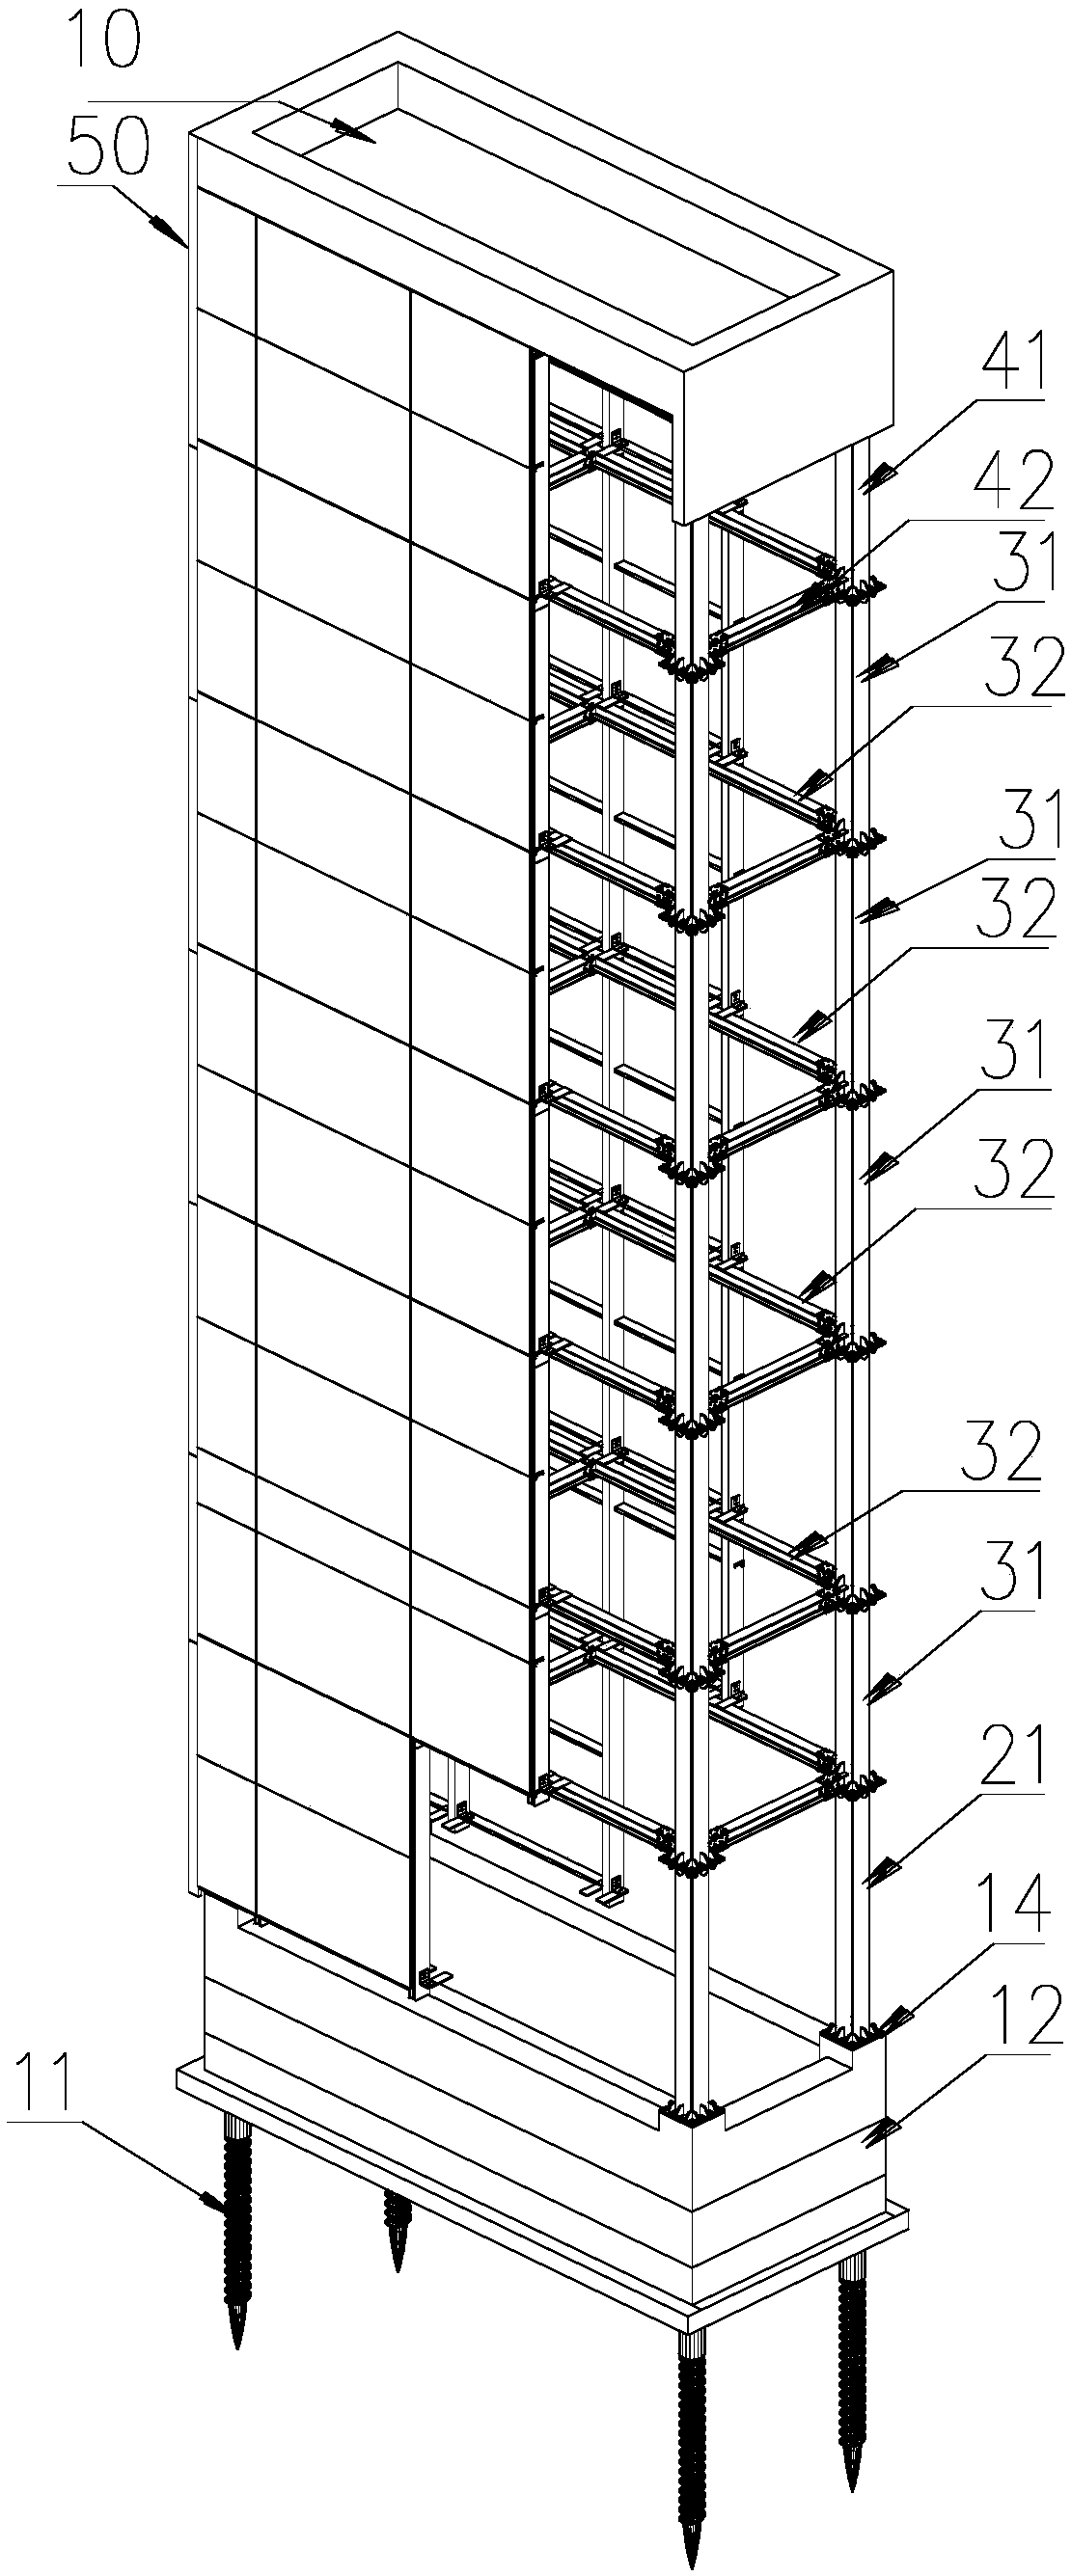 Jacking construction method for assembled-type external elevator shaftway structure